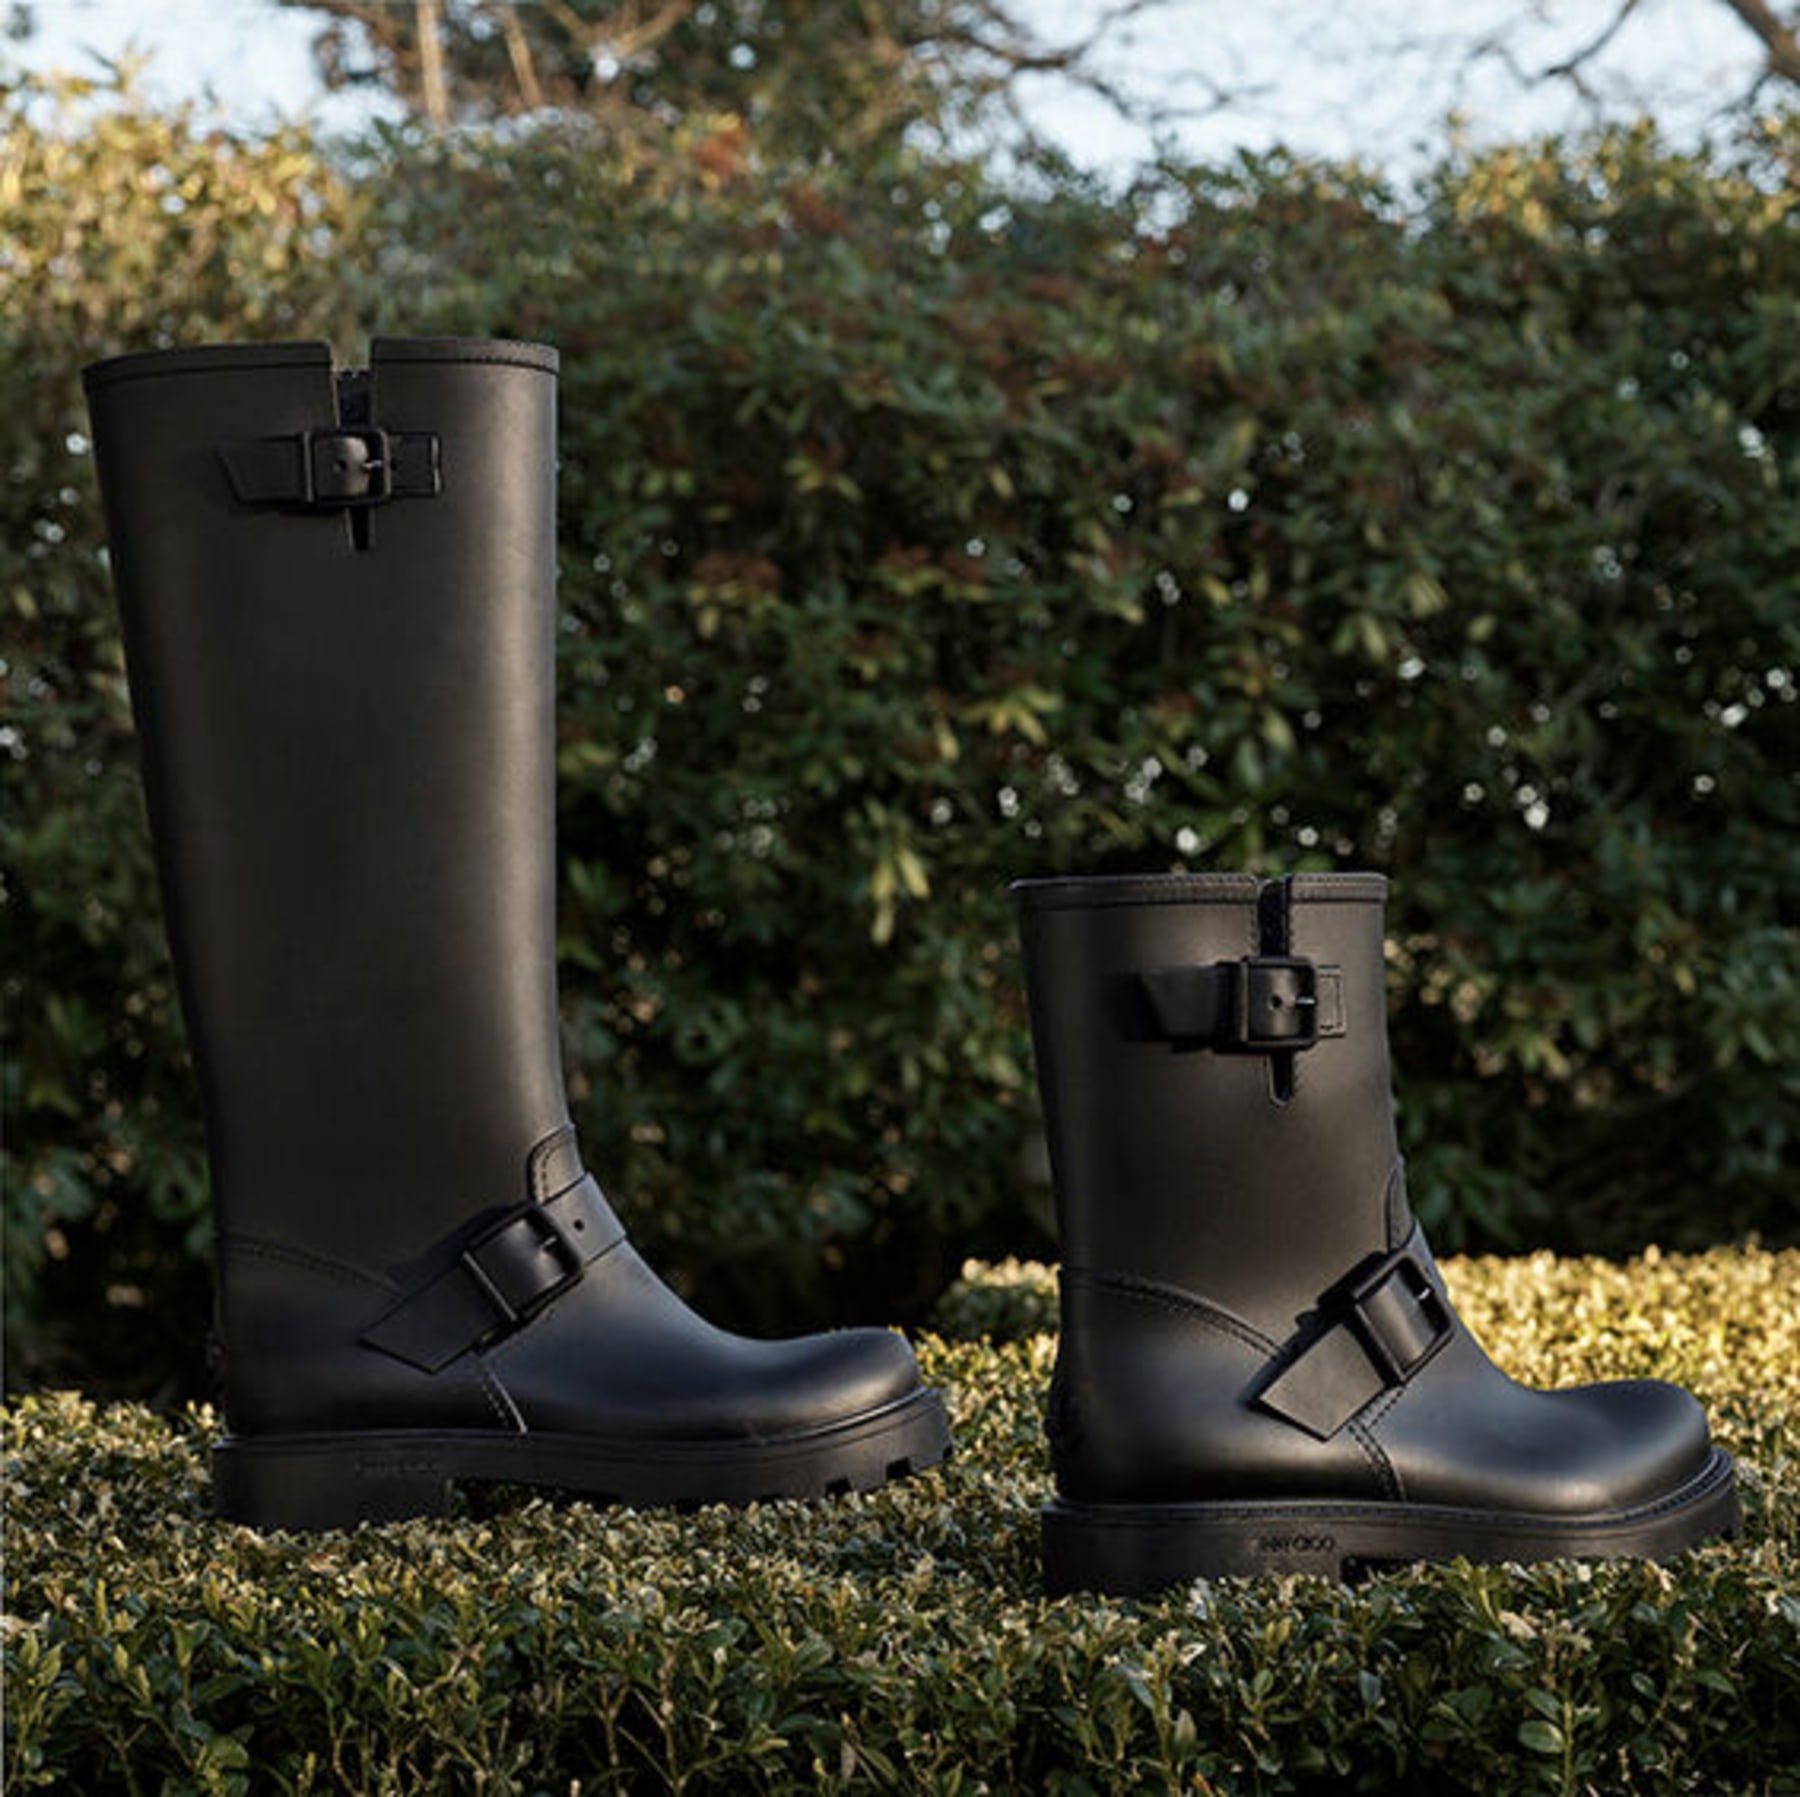 Yael Flat
Black Biodegradable Rubber Rain Boots - 6